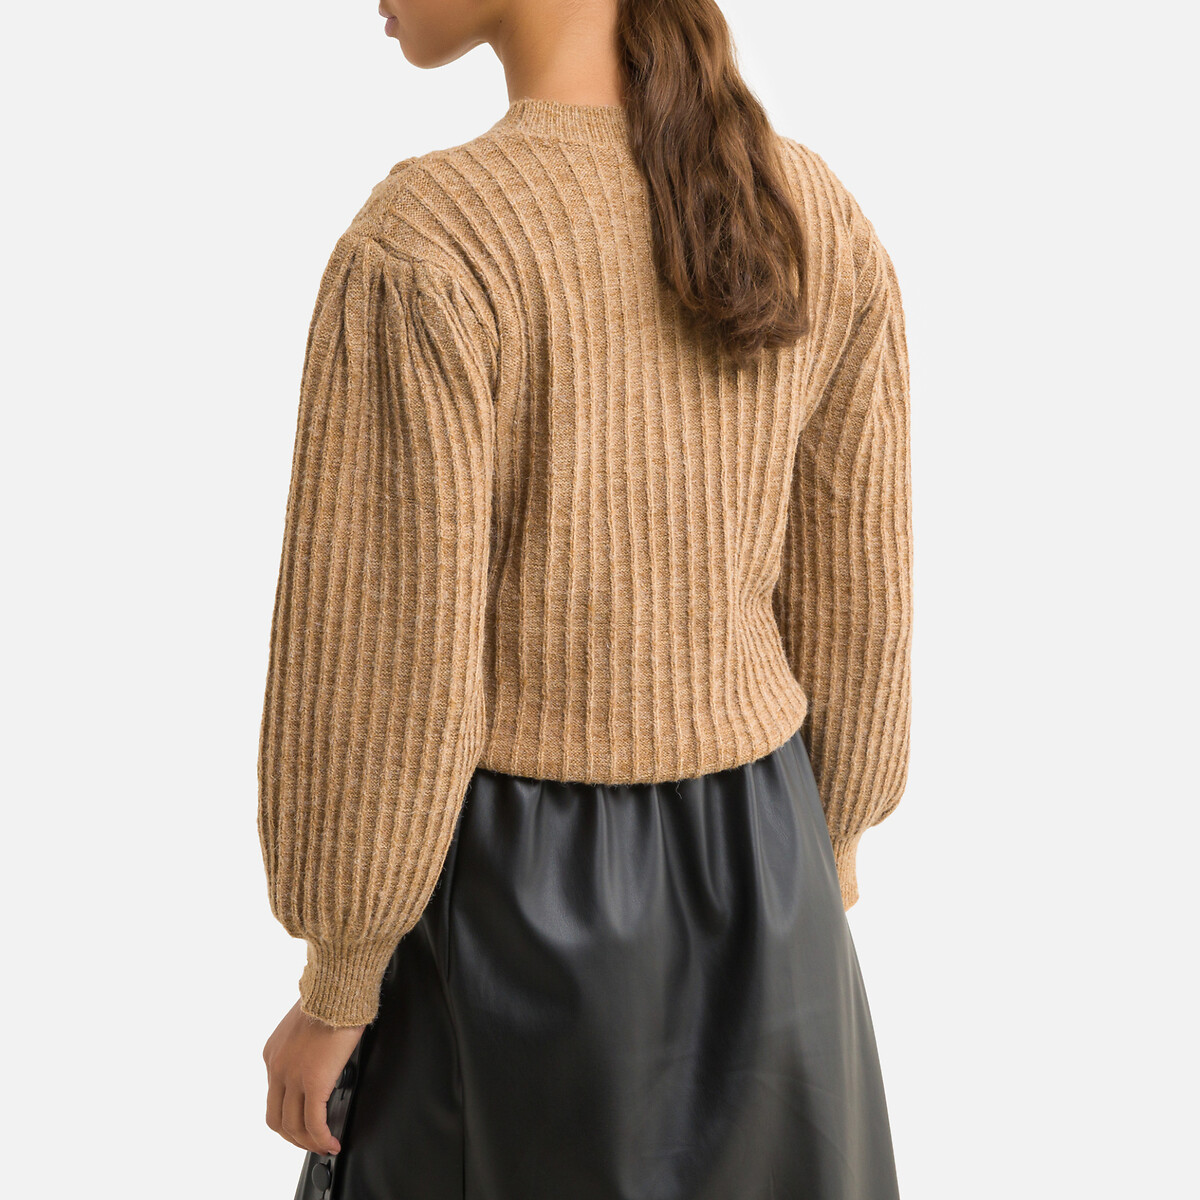 Пуловер MOLLY BRACKEN Из трикотажа меланж с напускными рукавами XS каштановый, размер XS - фото 4